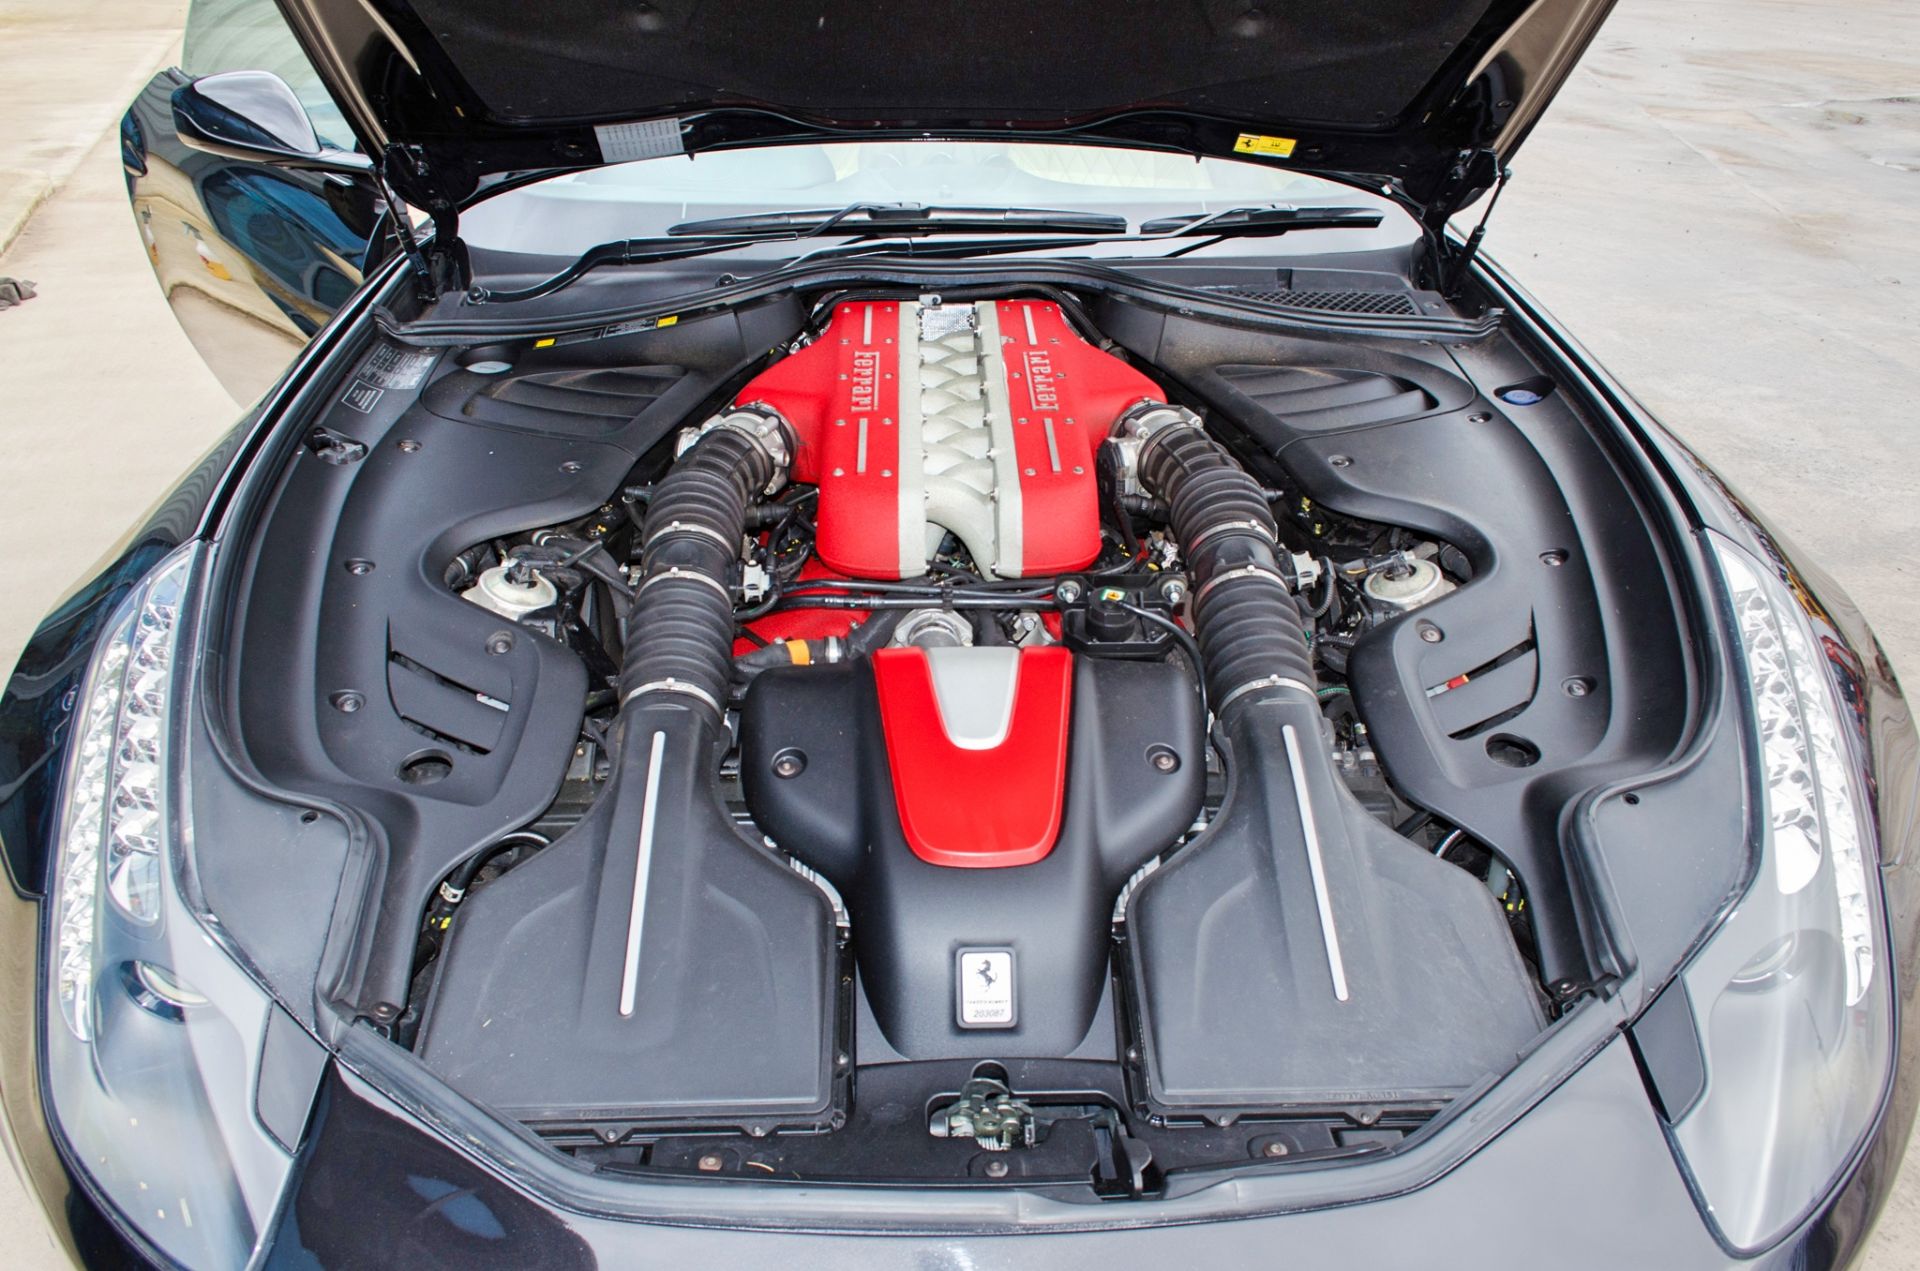 2014 Ferrari FF 6262cc V12 3 door coupe - Image 59 of 74